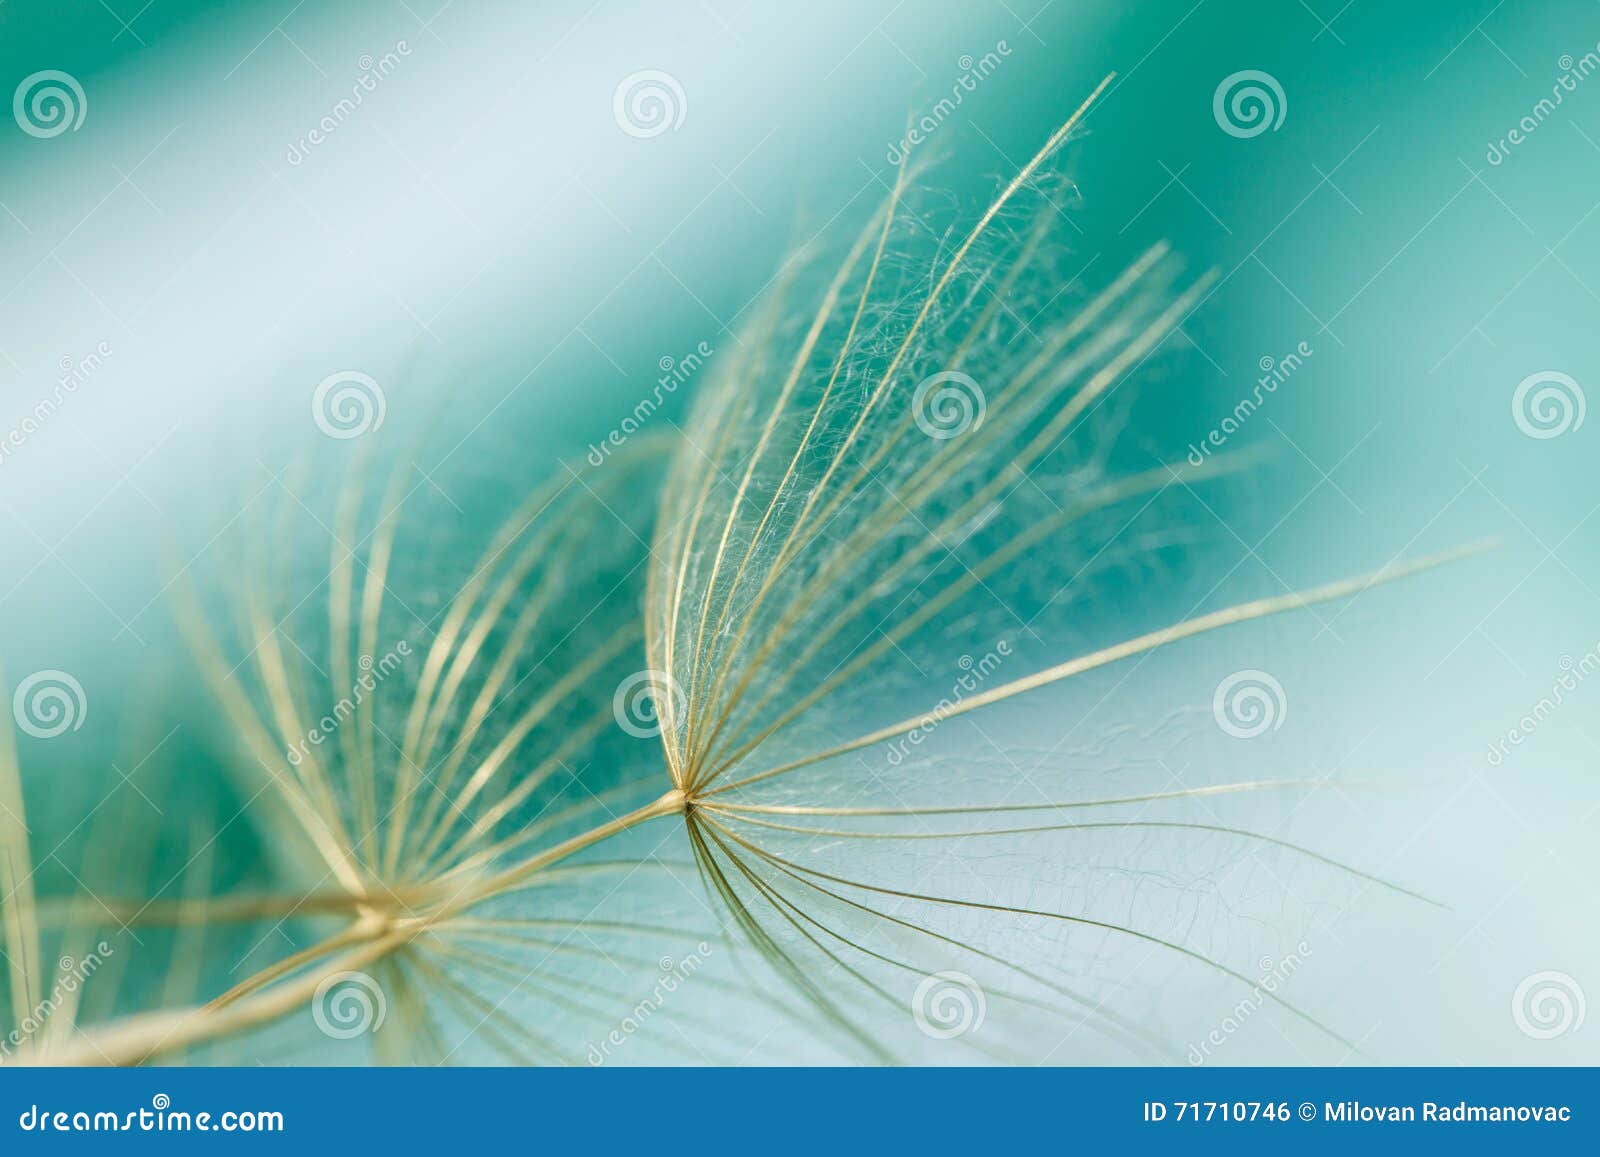 macro of dandelion seed